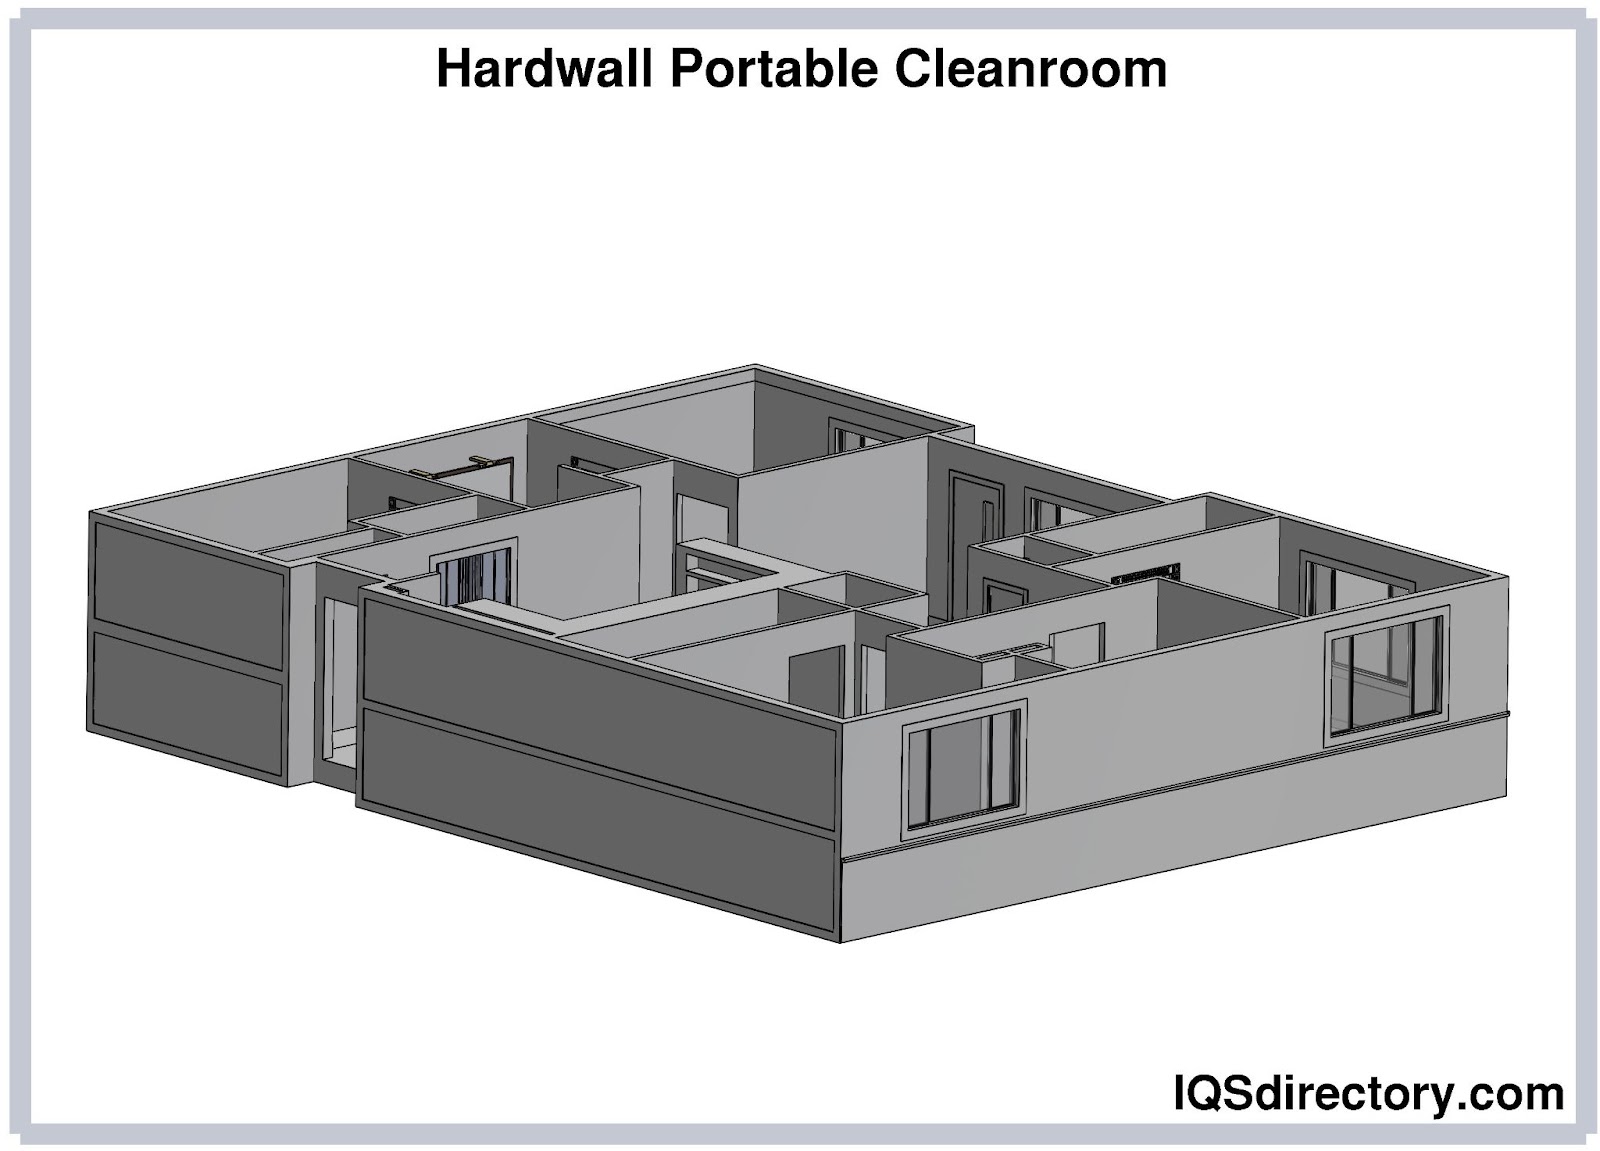 Hardwall Portable Cleanroom